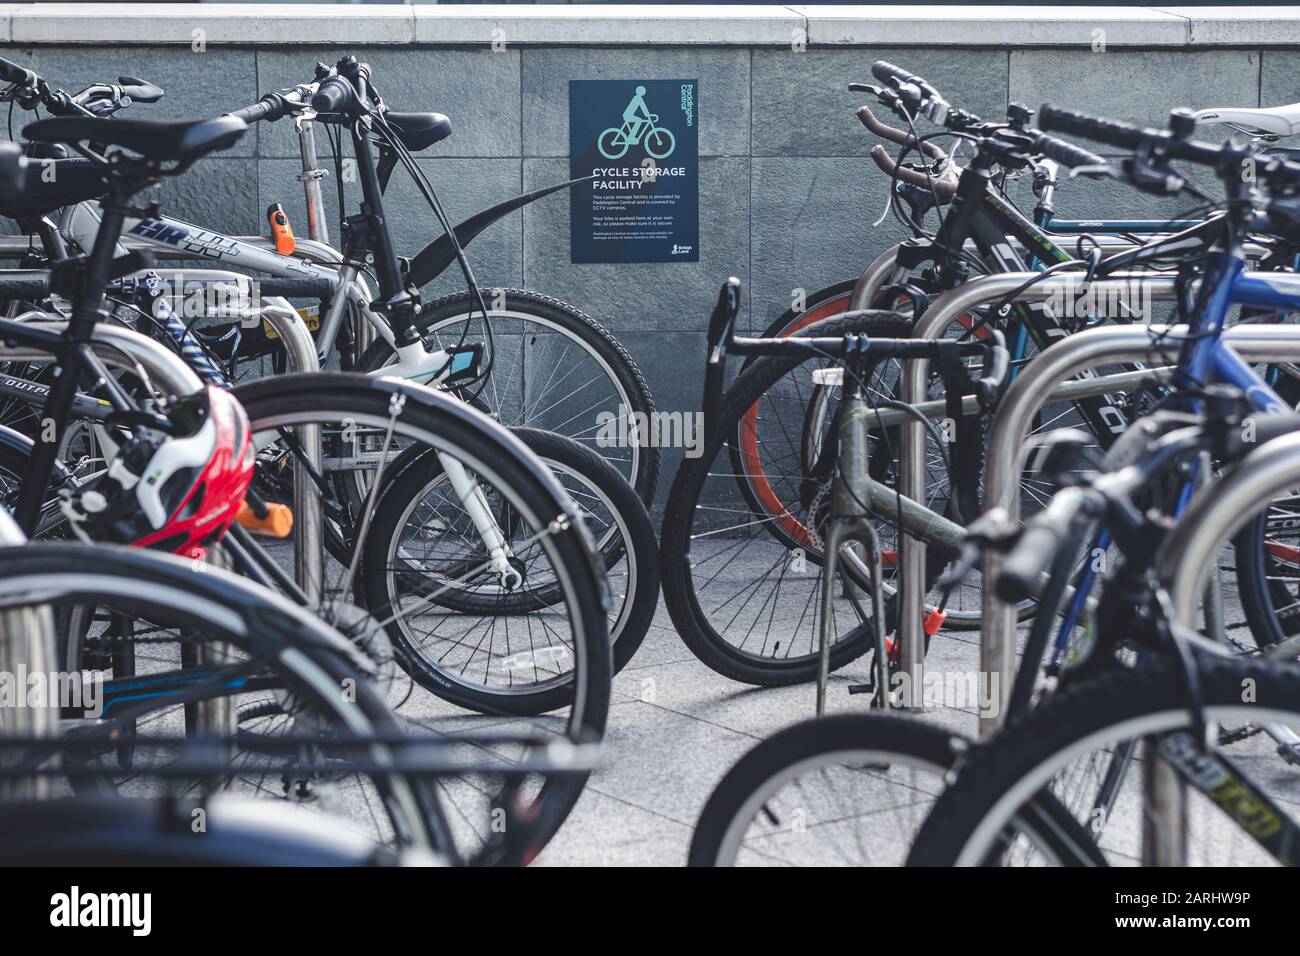 Bikeshed Bicycle Storage Bicycle Storage Shed Bike Storage In Shed